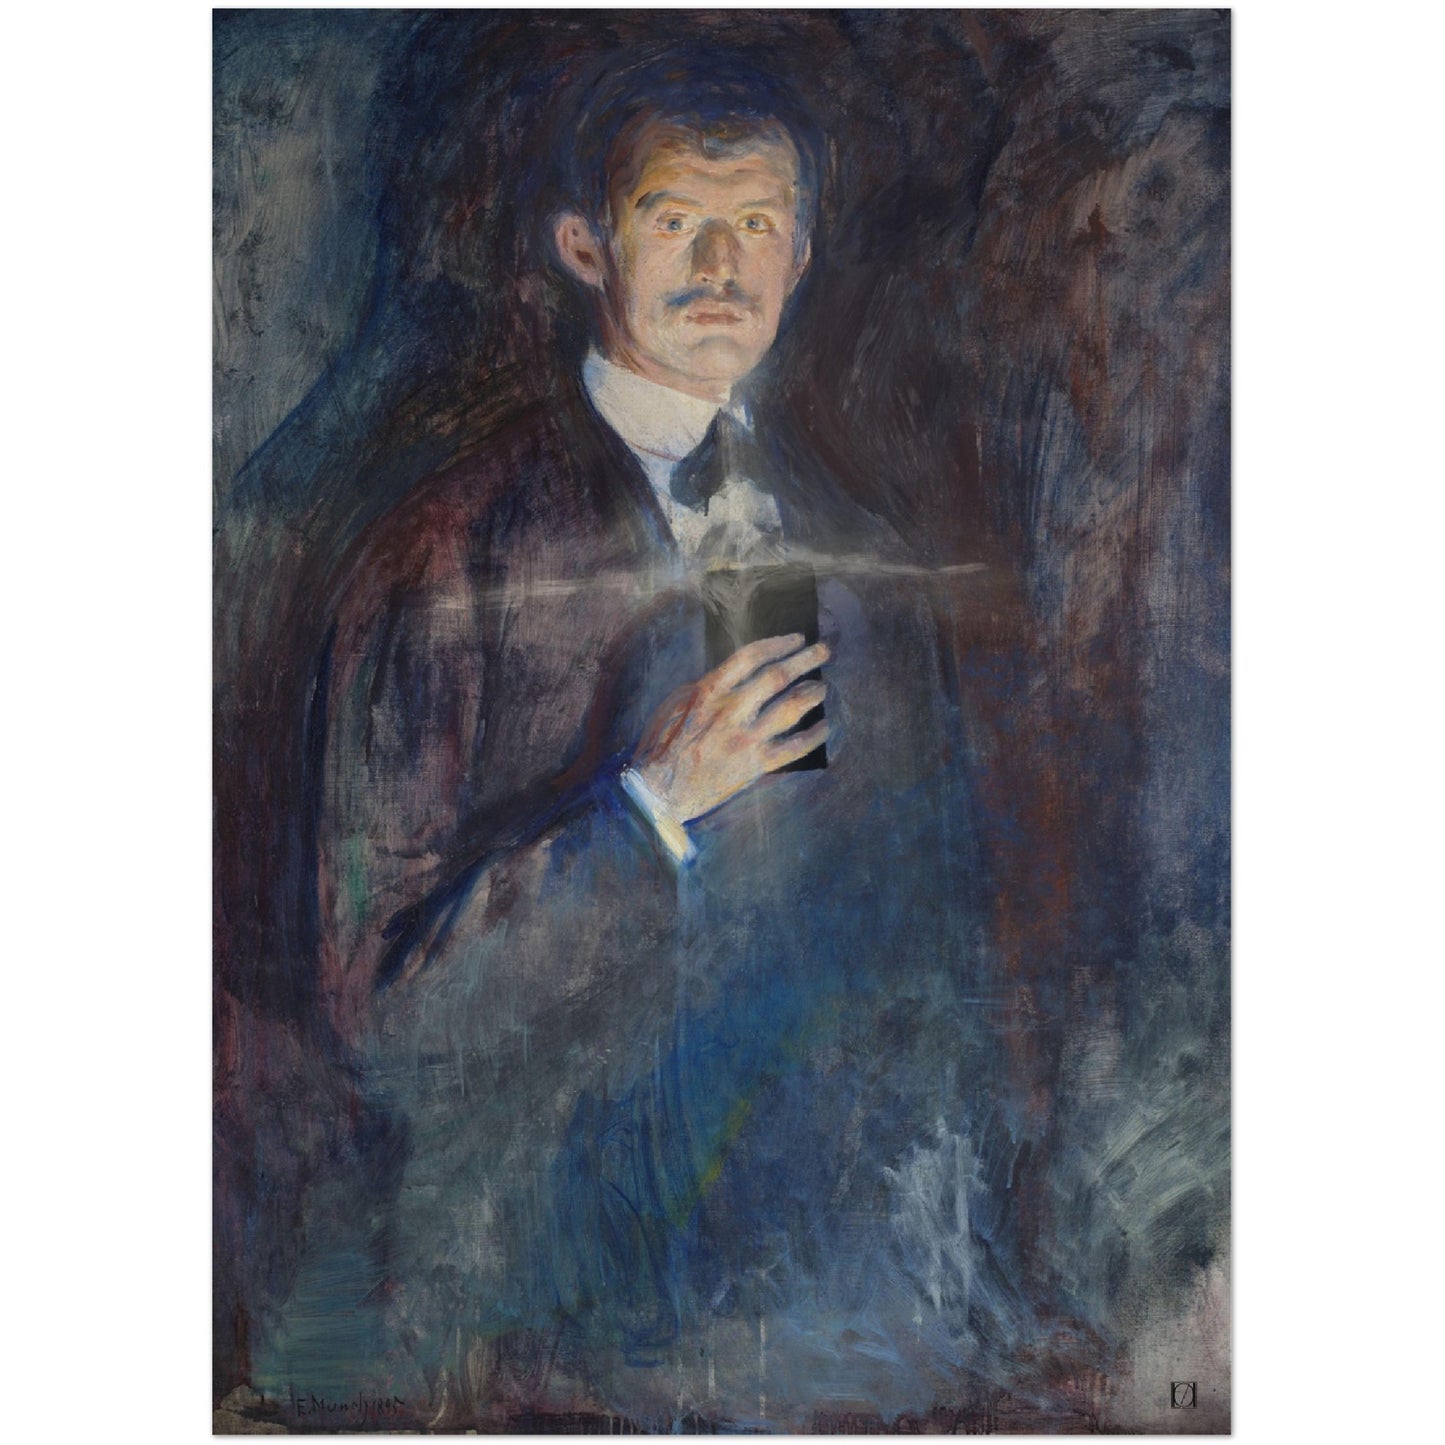 Munch taking a selfie - poster